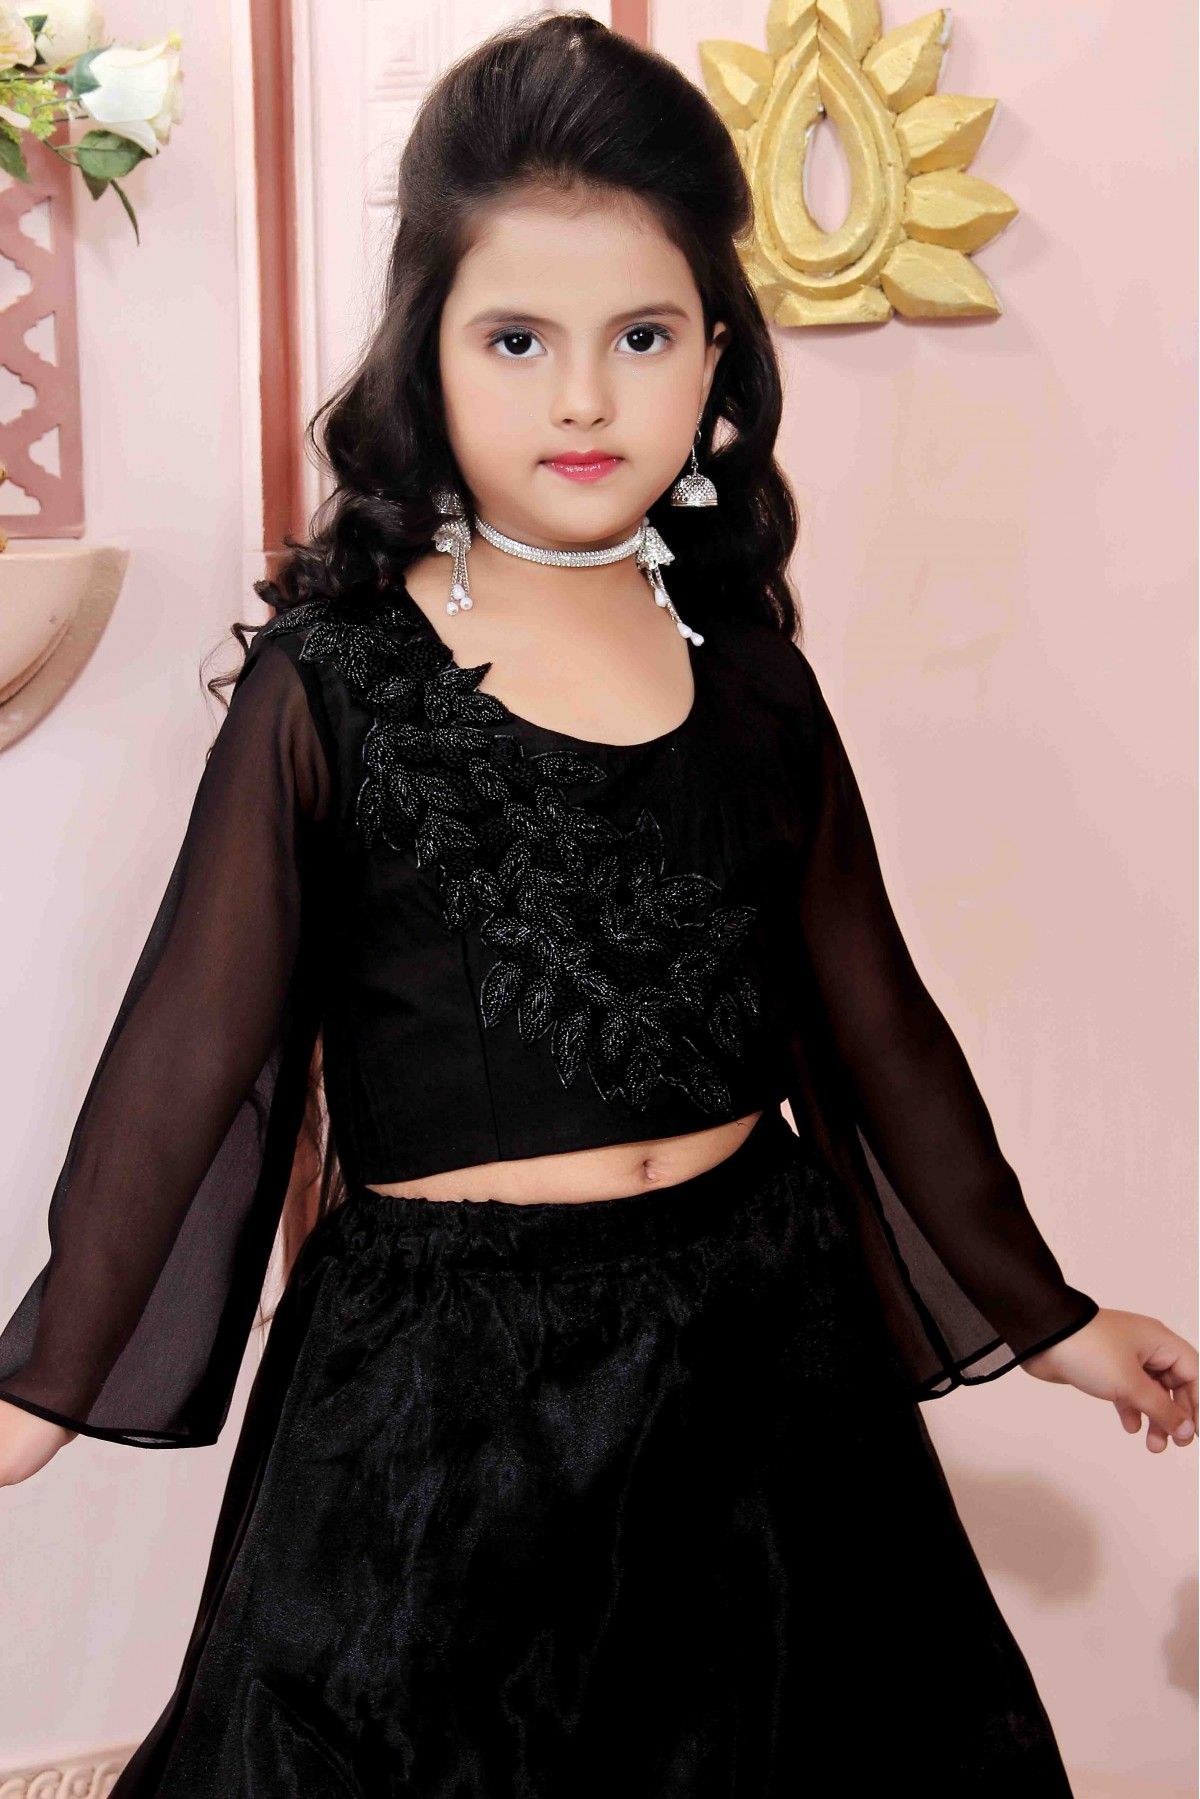 Sticthed Girls Lehenga, Party Wear Kids Dress, Pavadai Set, Indian Festive  Wear | eBay